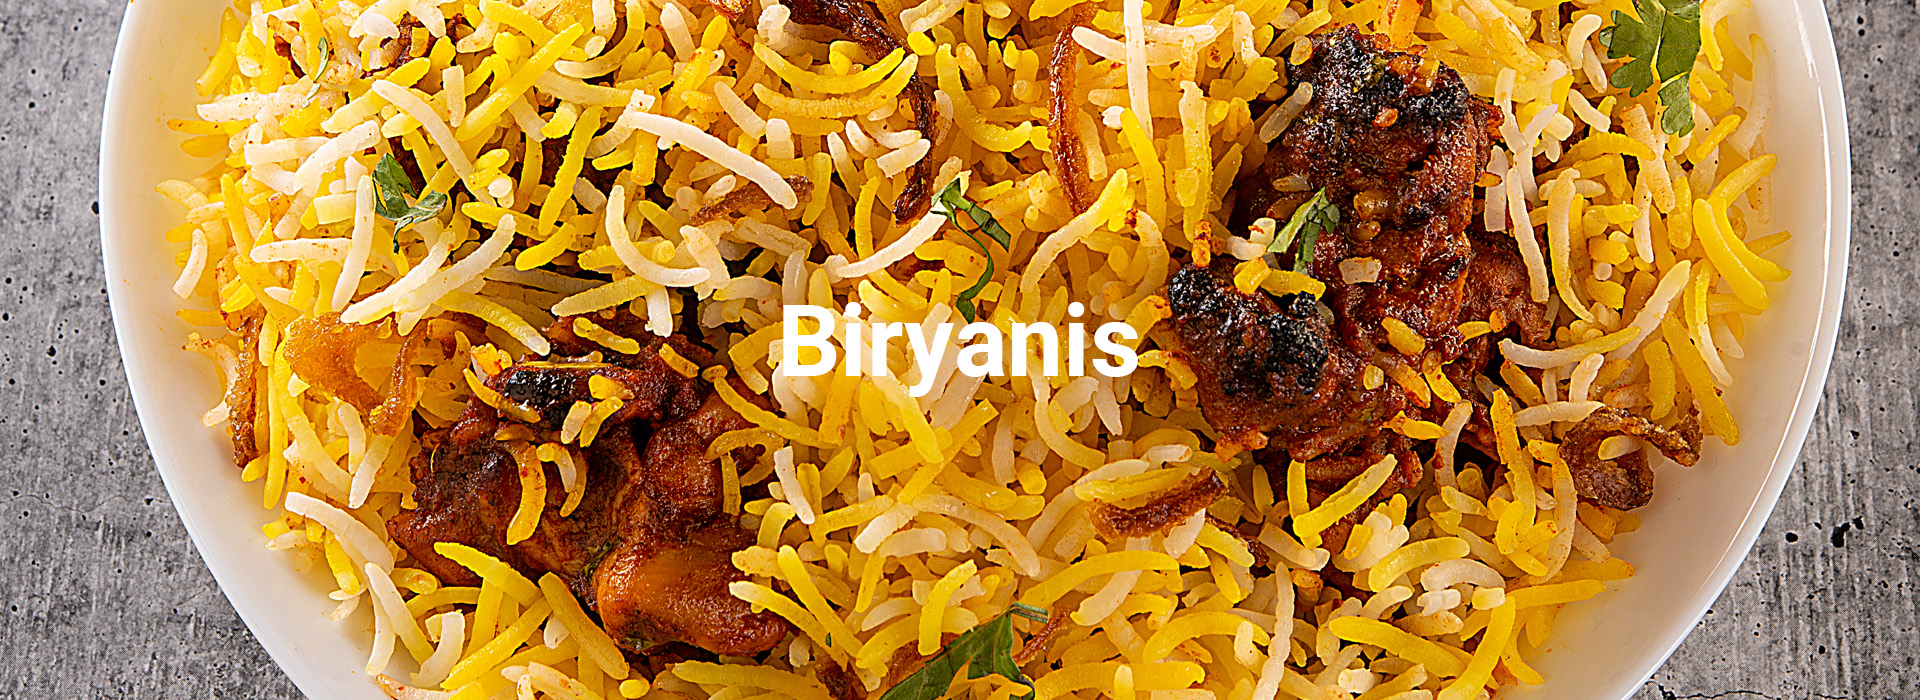 Indian-food-Biryani-menu-banner-odesi-aroma (7)